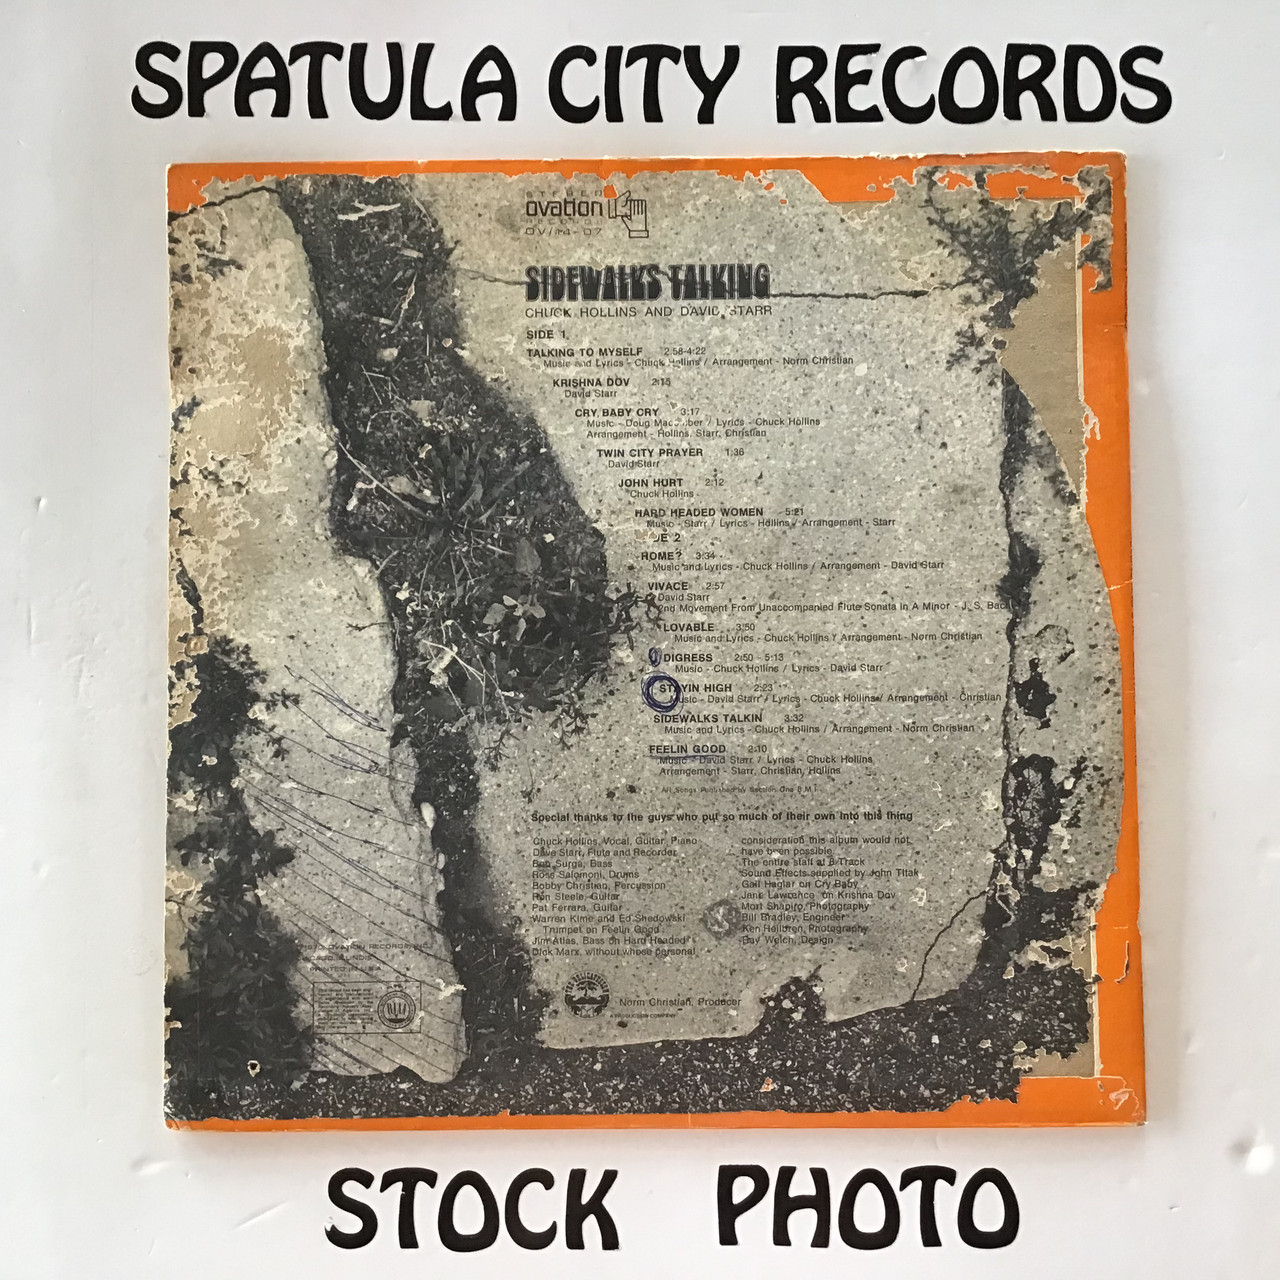 Hollins and Starr - Sidewalks Talking - vinyl record album LP